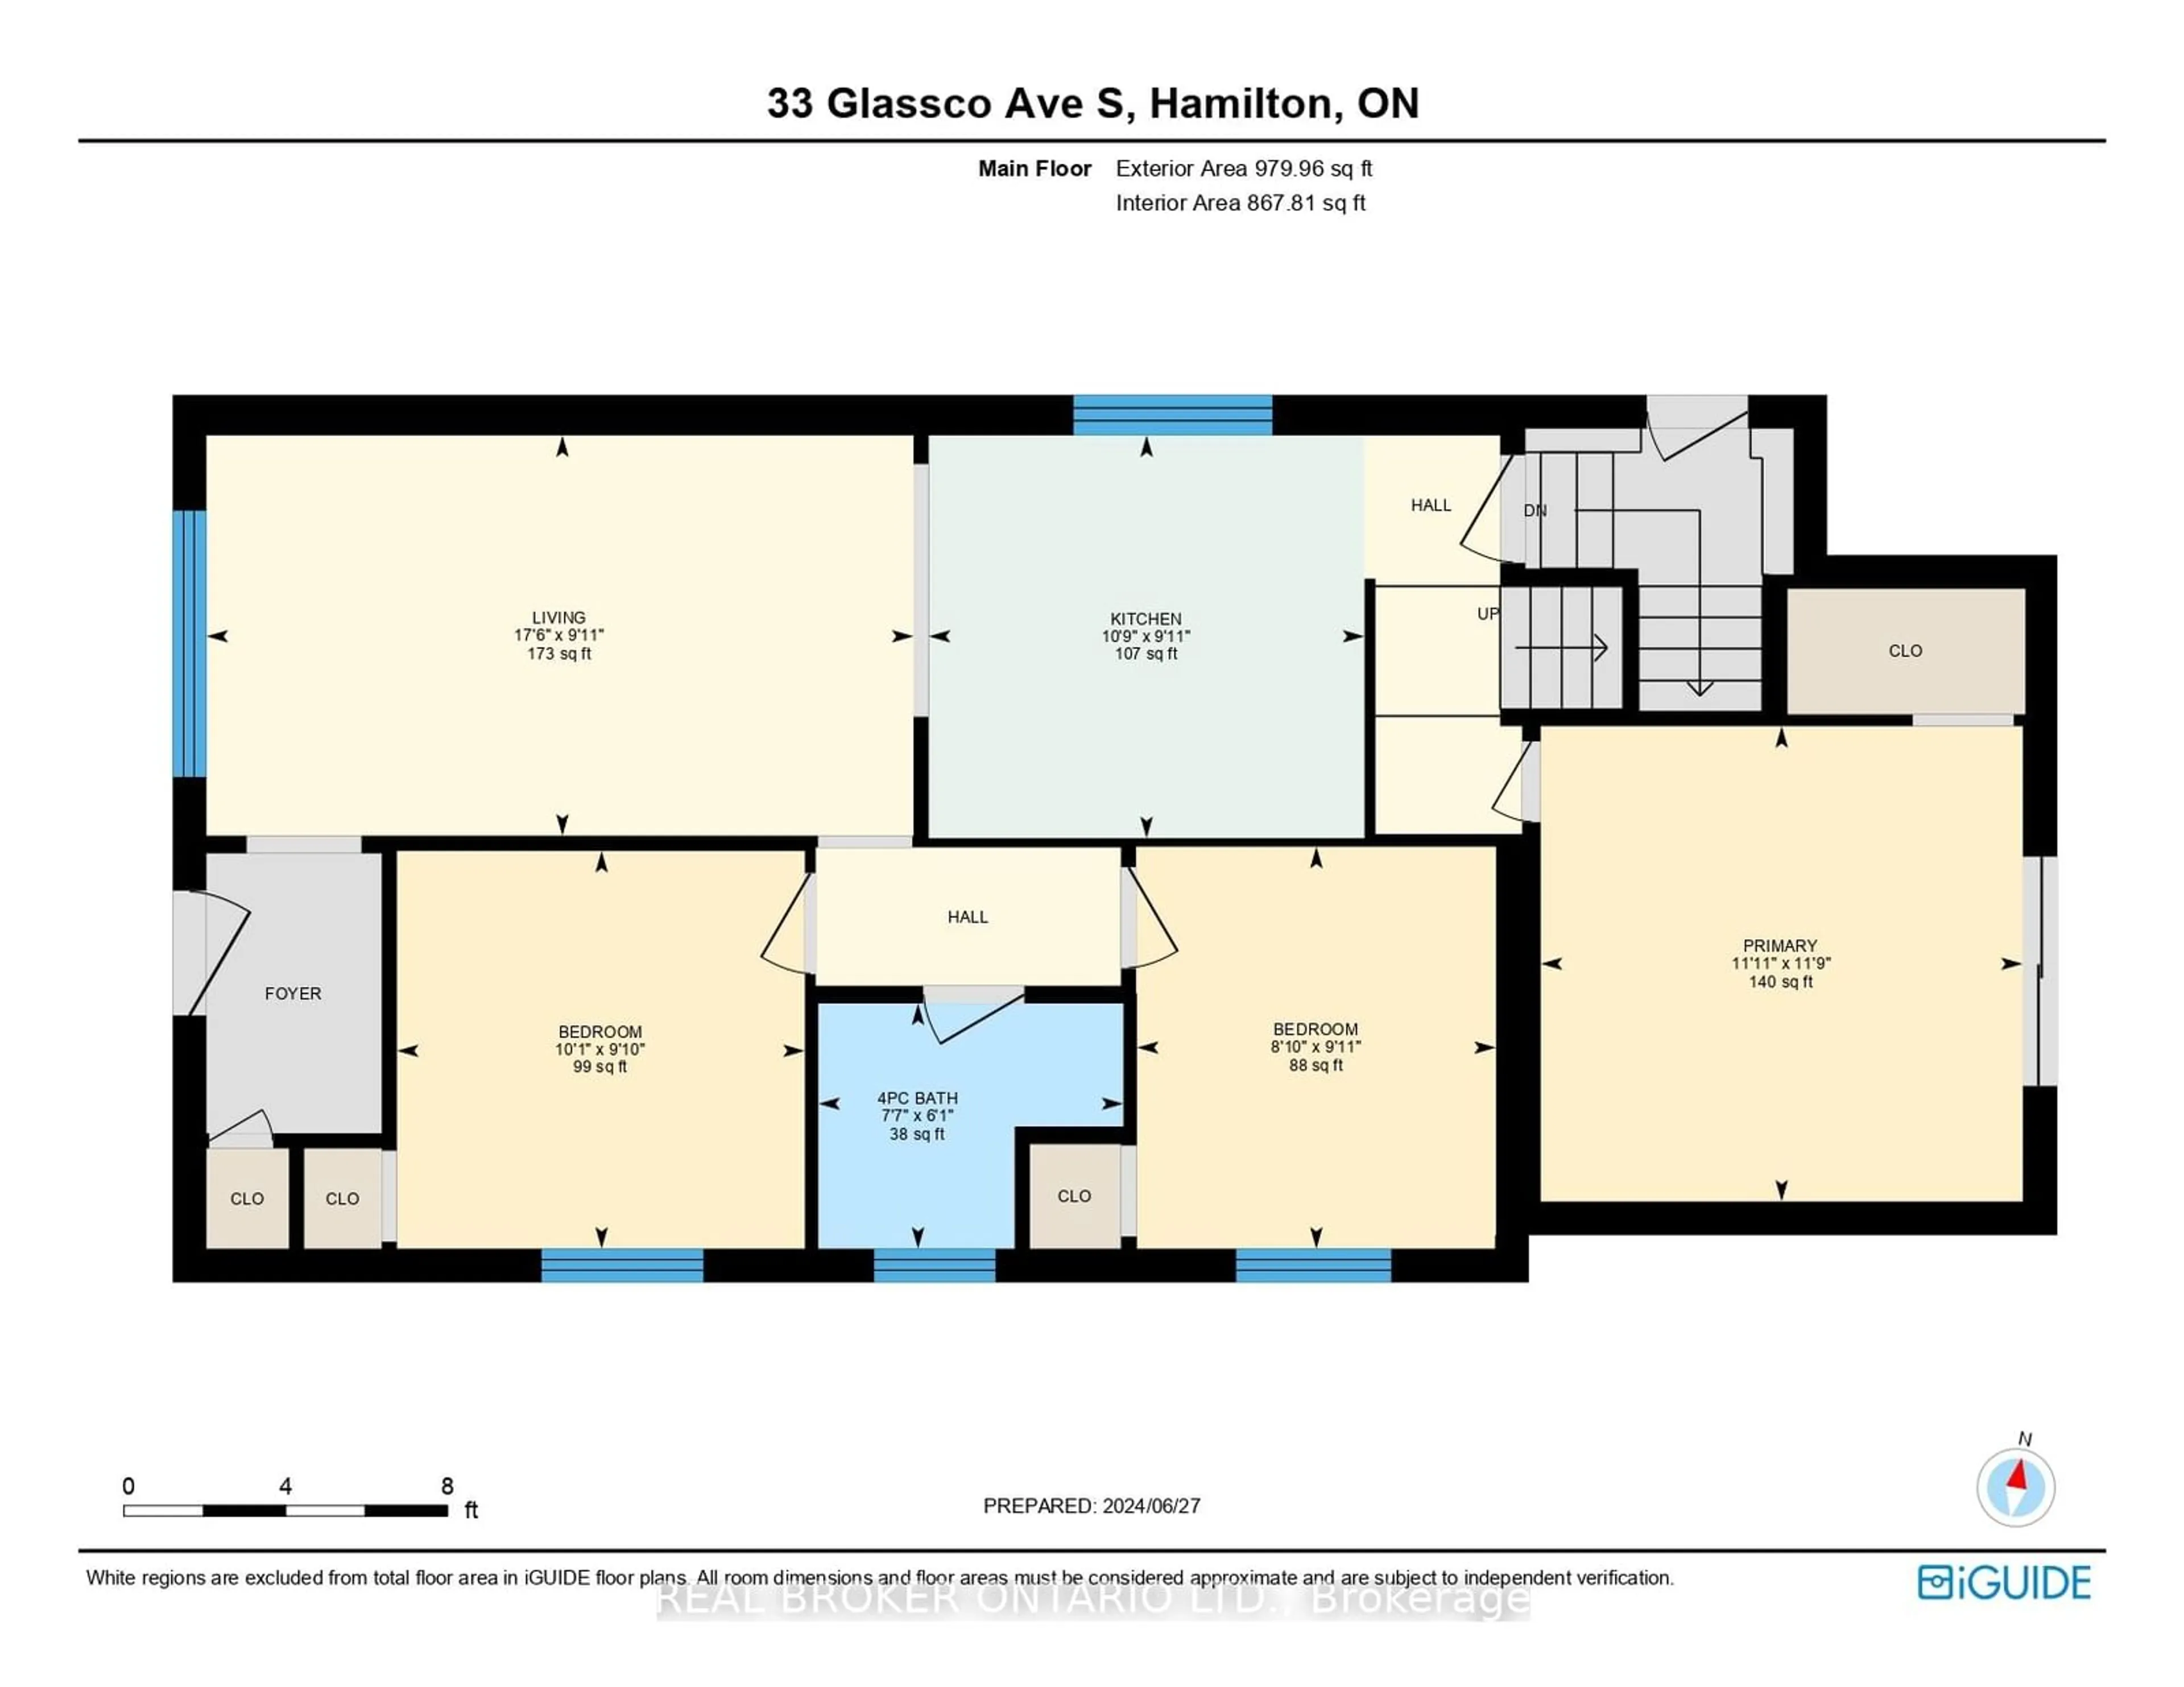 Floor plan for 33 Glassco Ave, Hamilton Ontario L8H 1B2